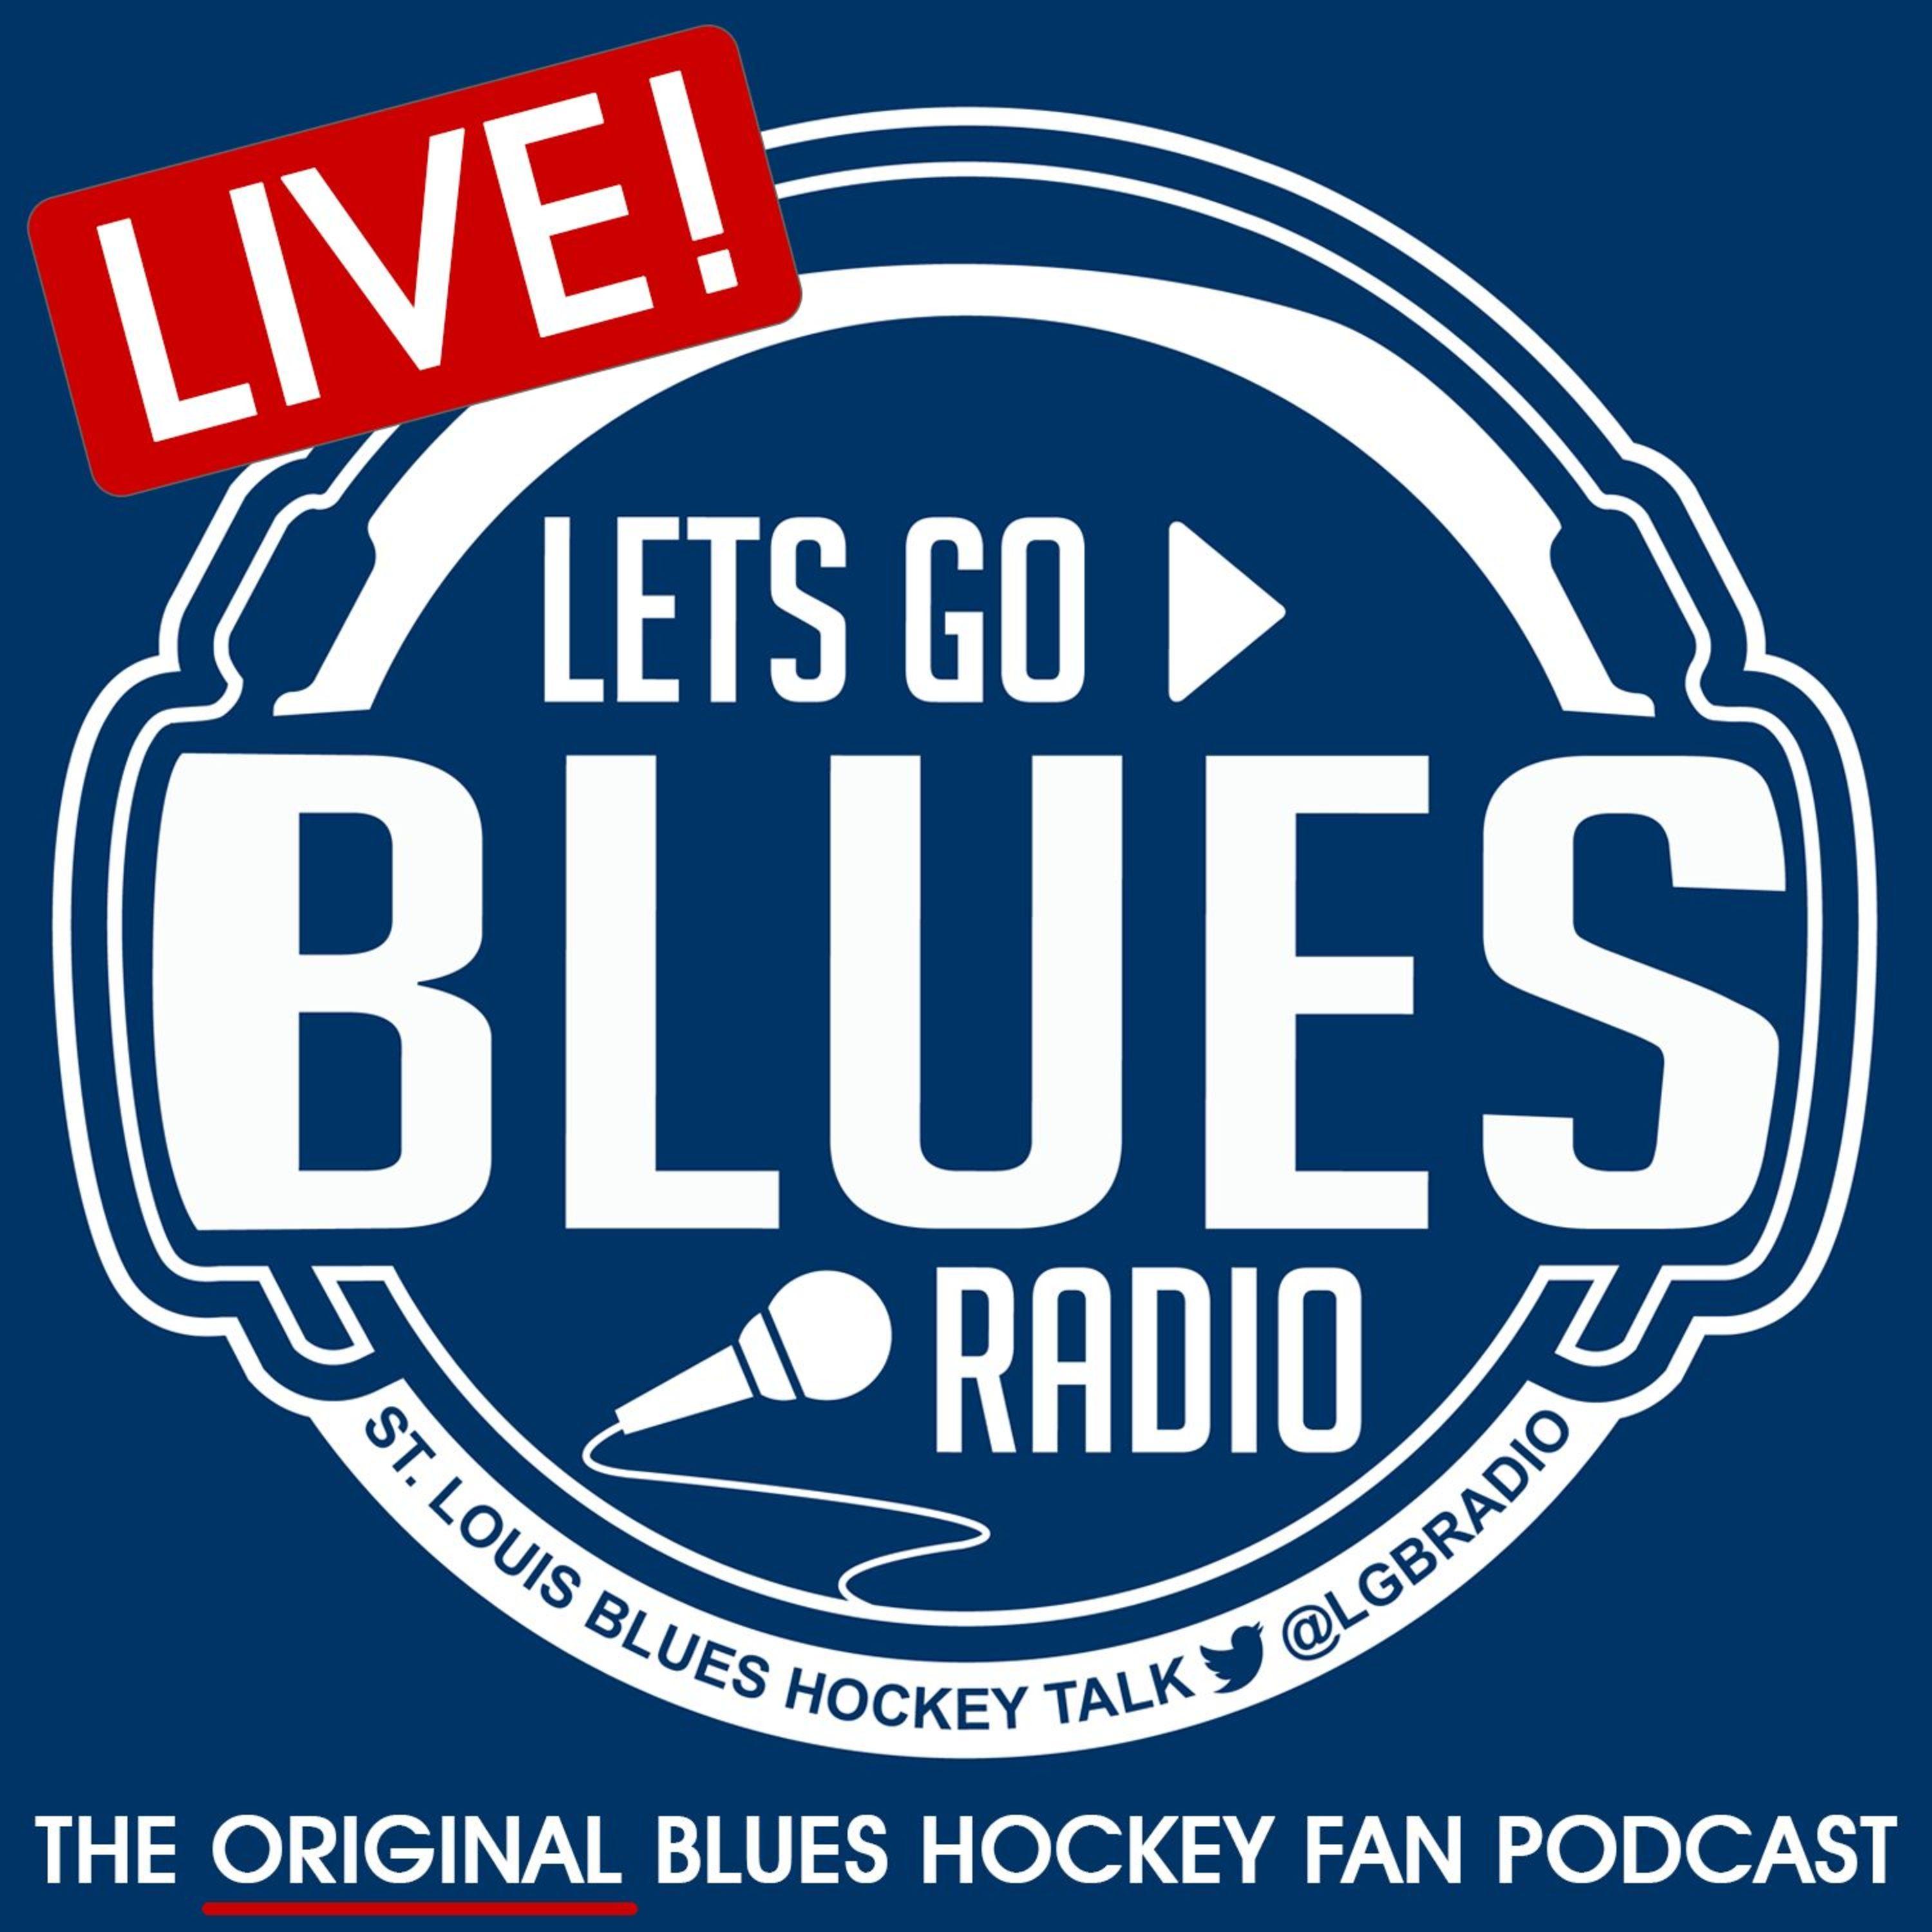 St. Louis Blues Hockey Logo - Lets Go Blues Radio. Louis Blues Hockey Podcast